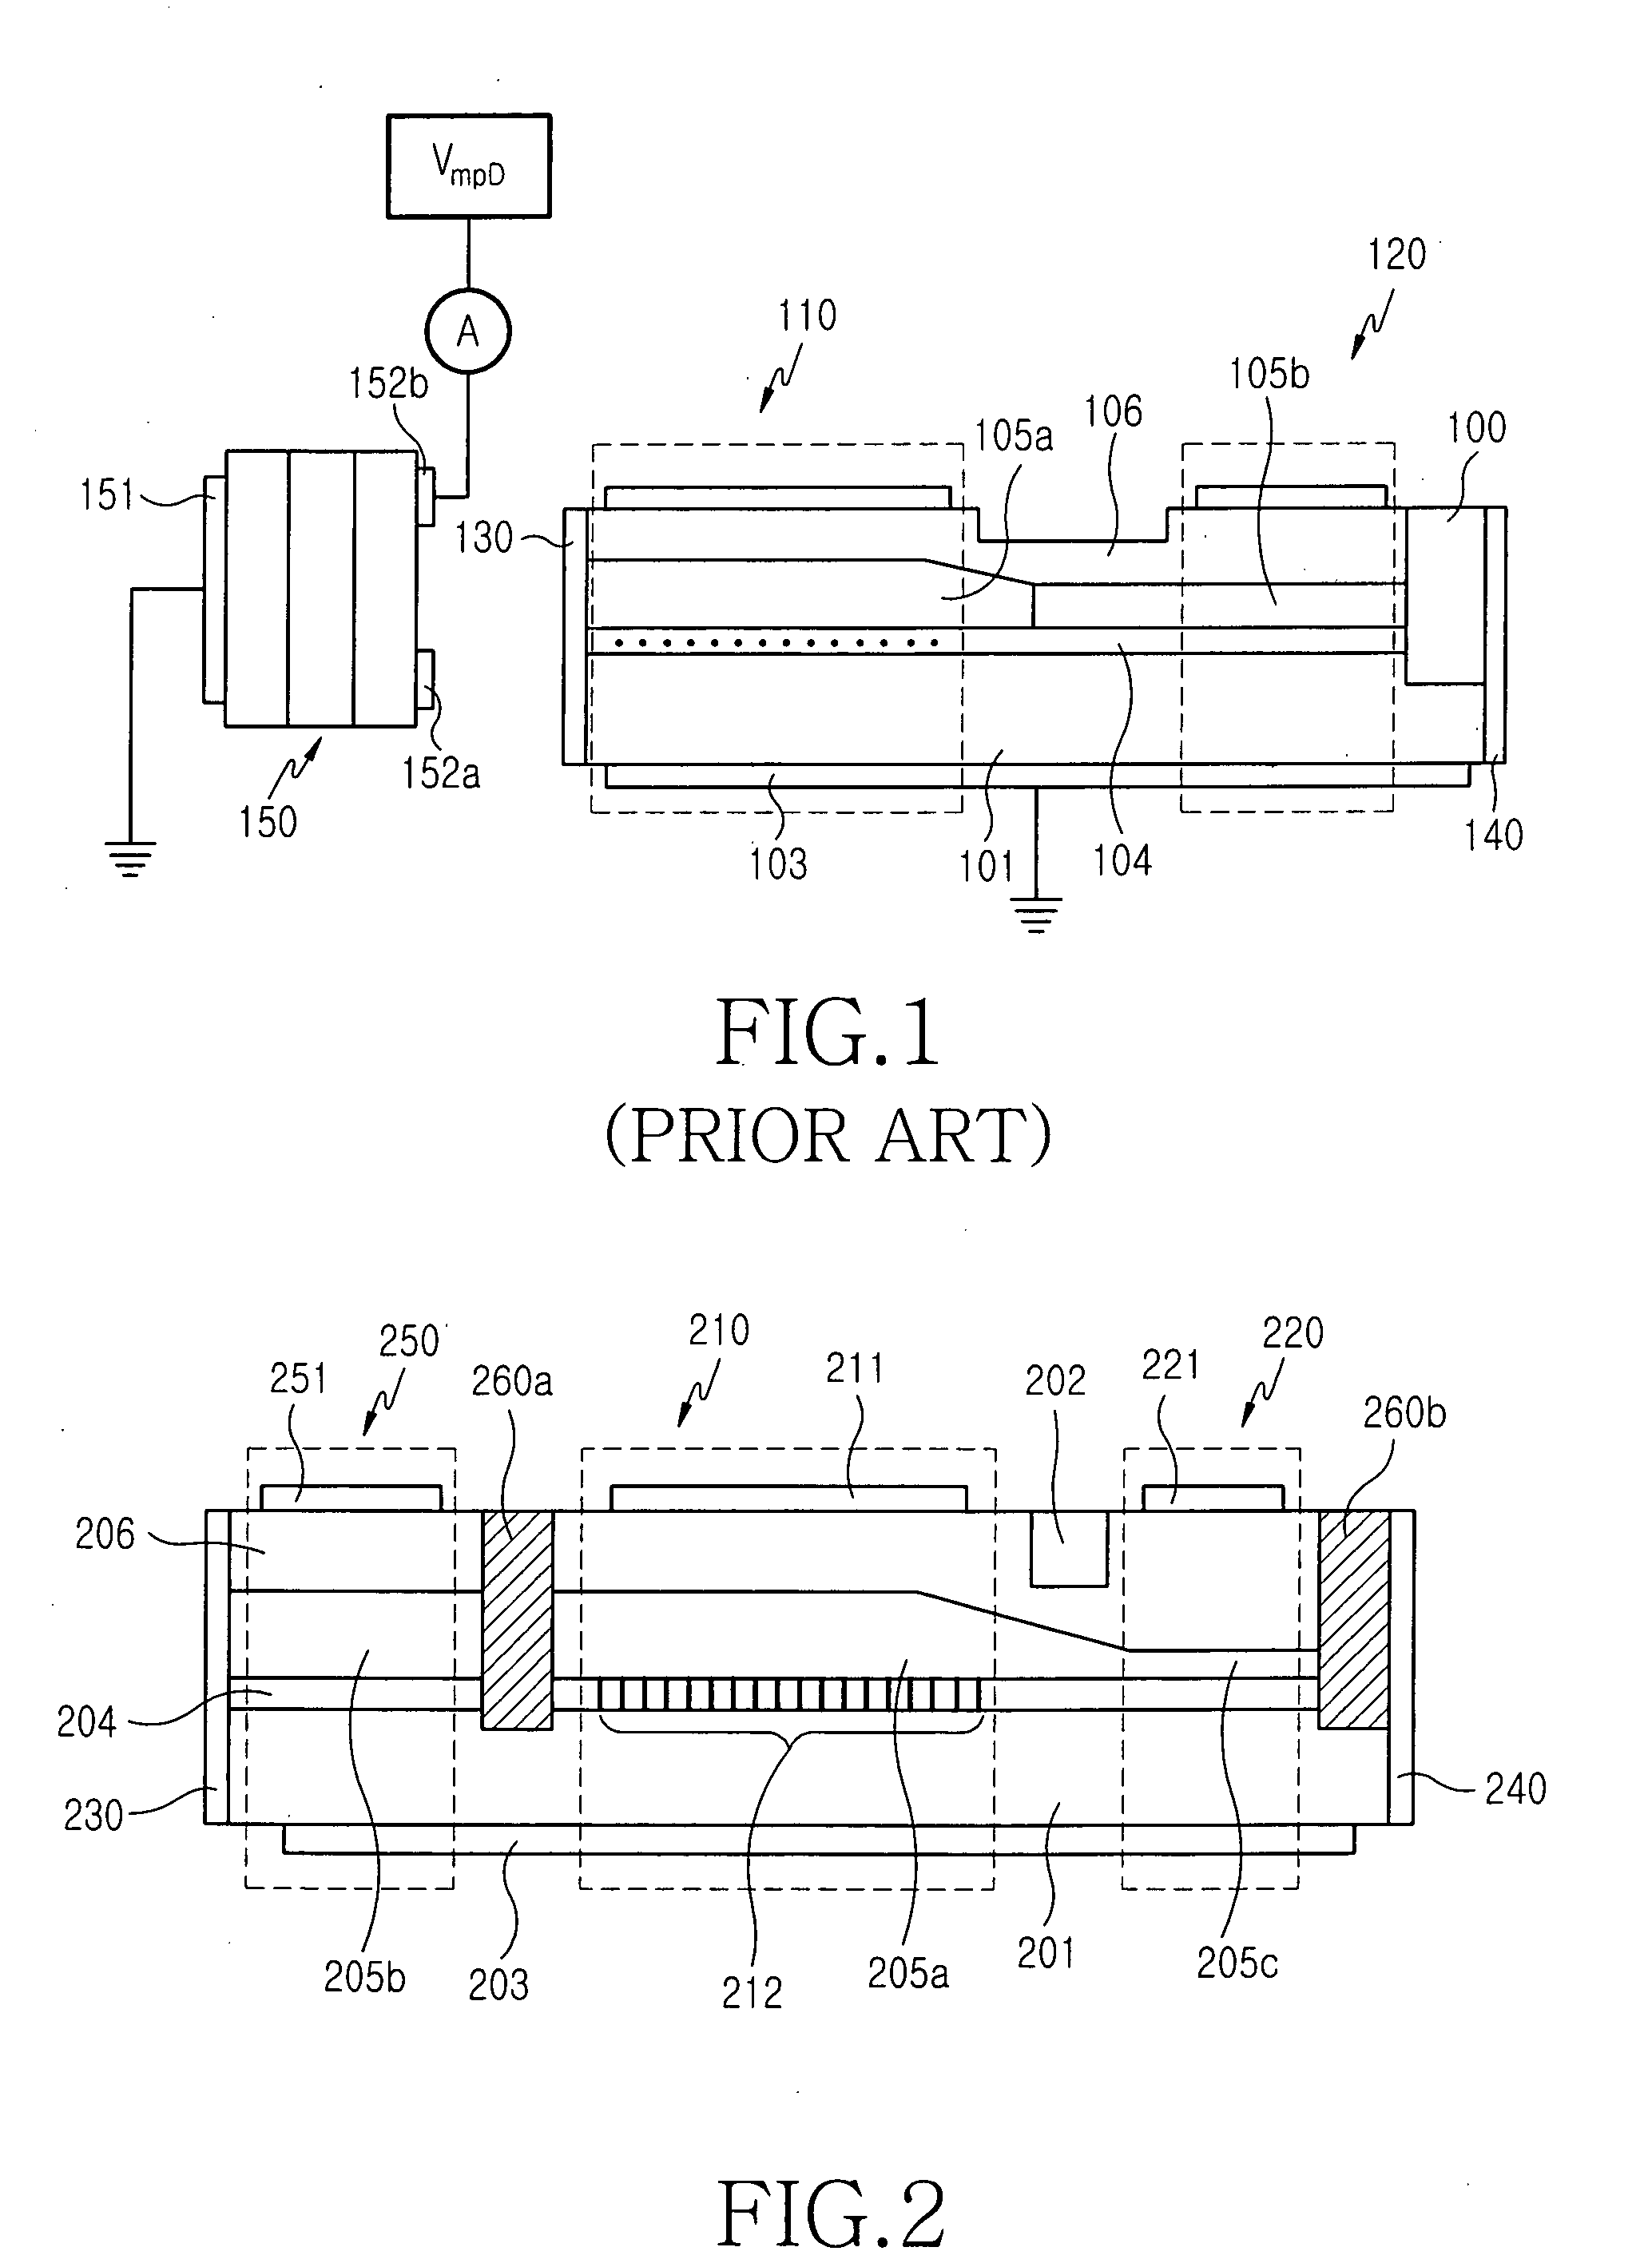 Electro-absorptive optical modulator module having monolithic integrated photo detector